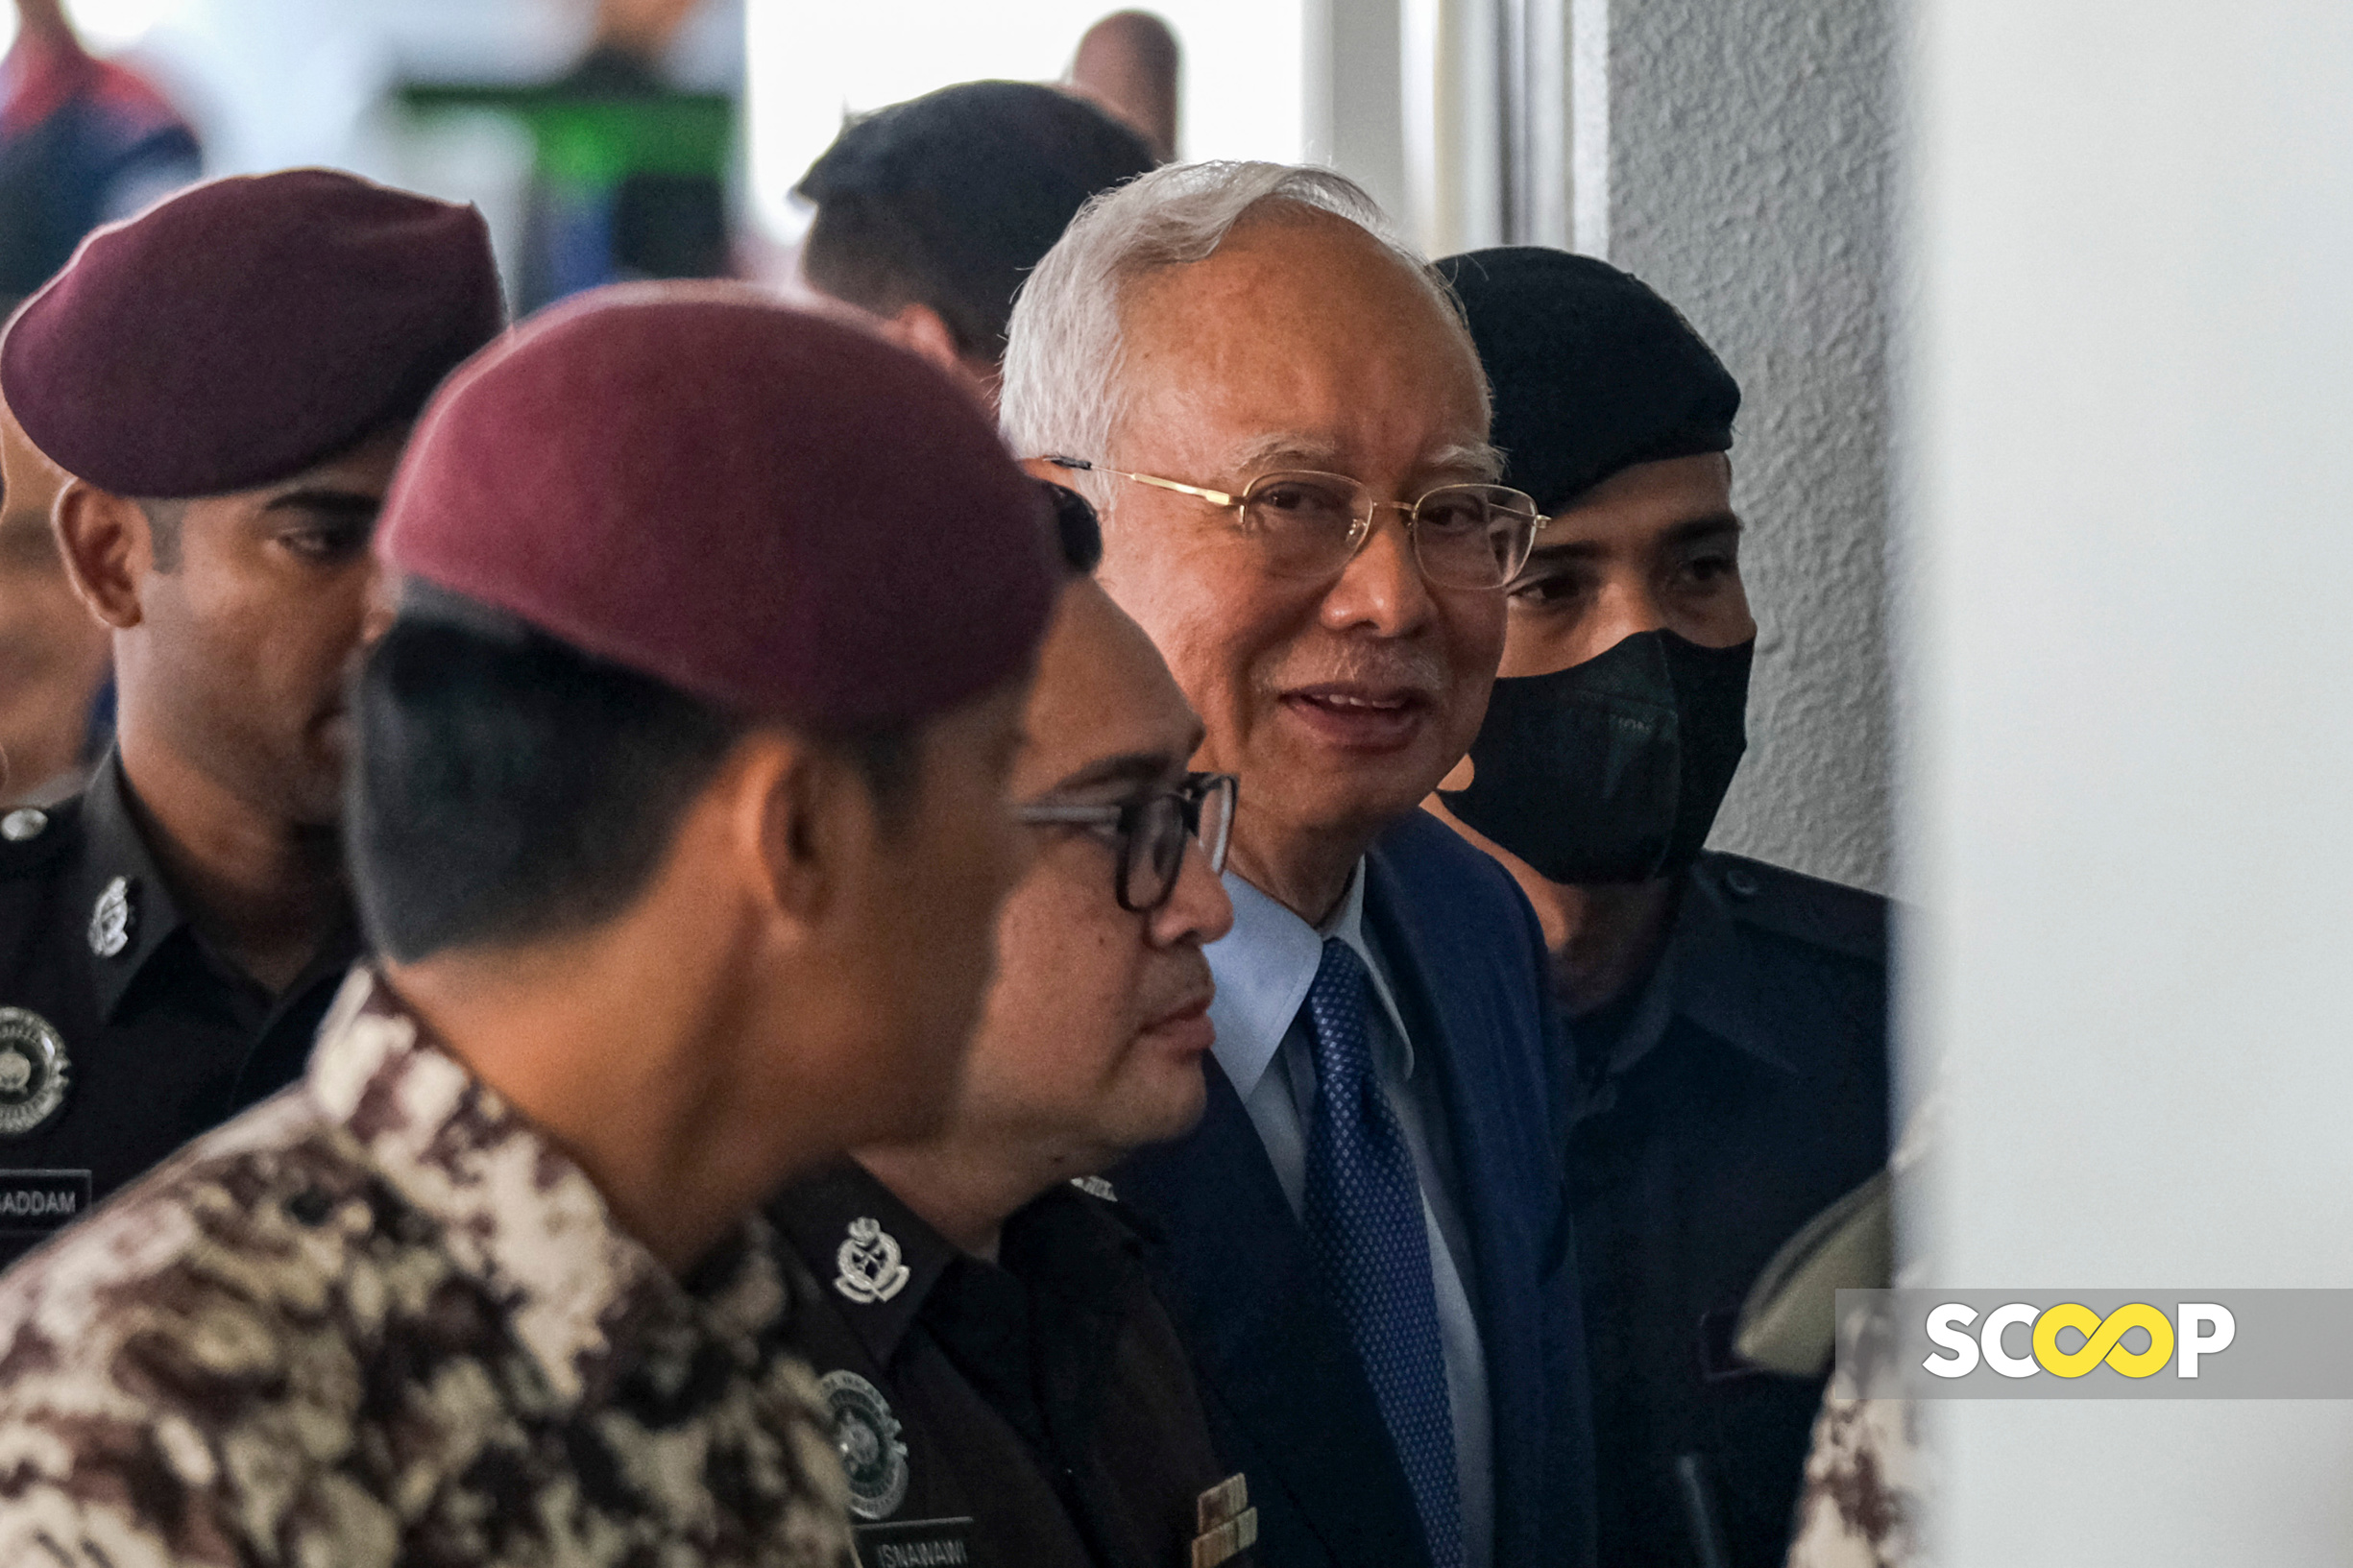 BNM analyst links RM2.28 bil 1MDB funds to Najib's personal accounts